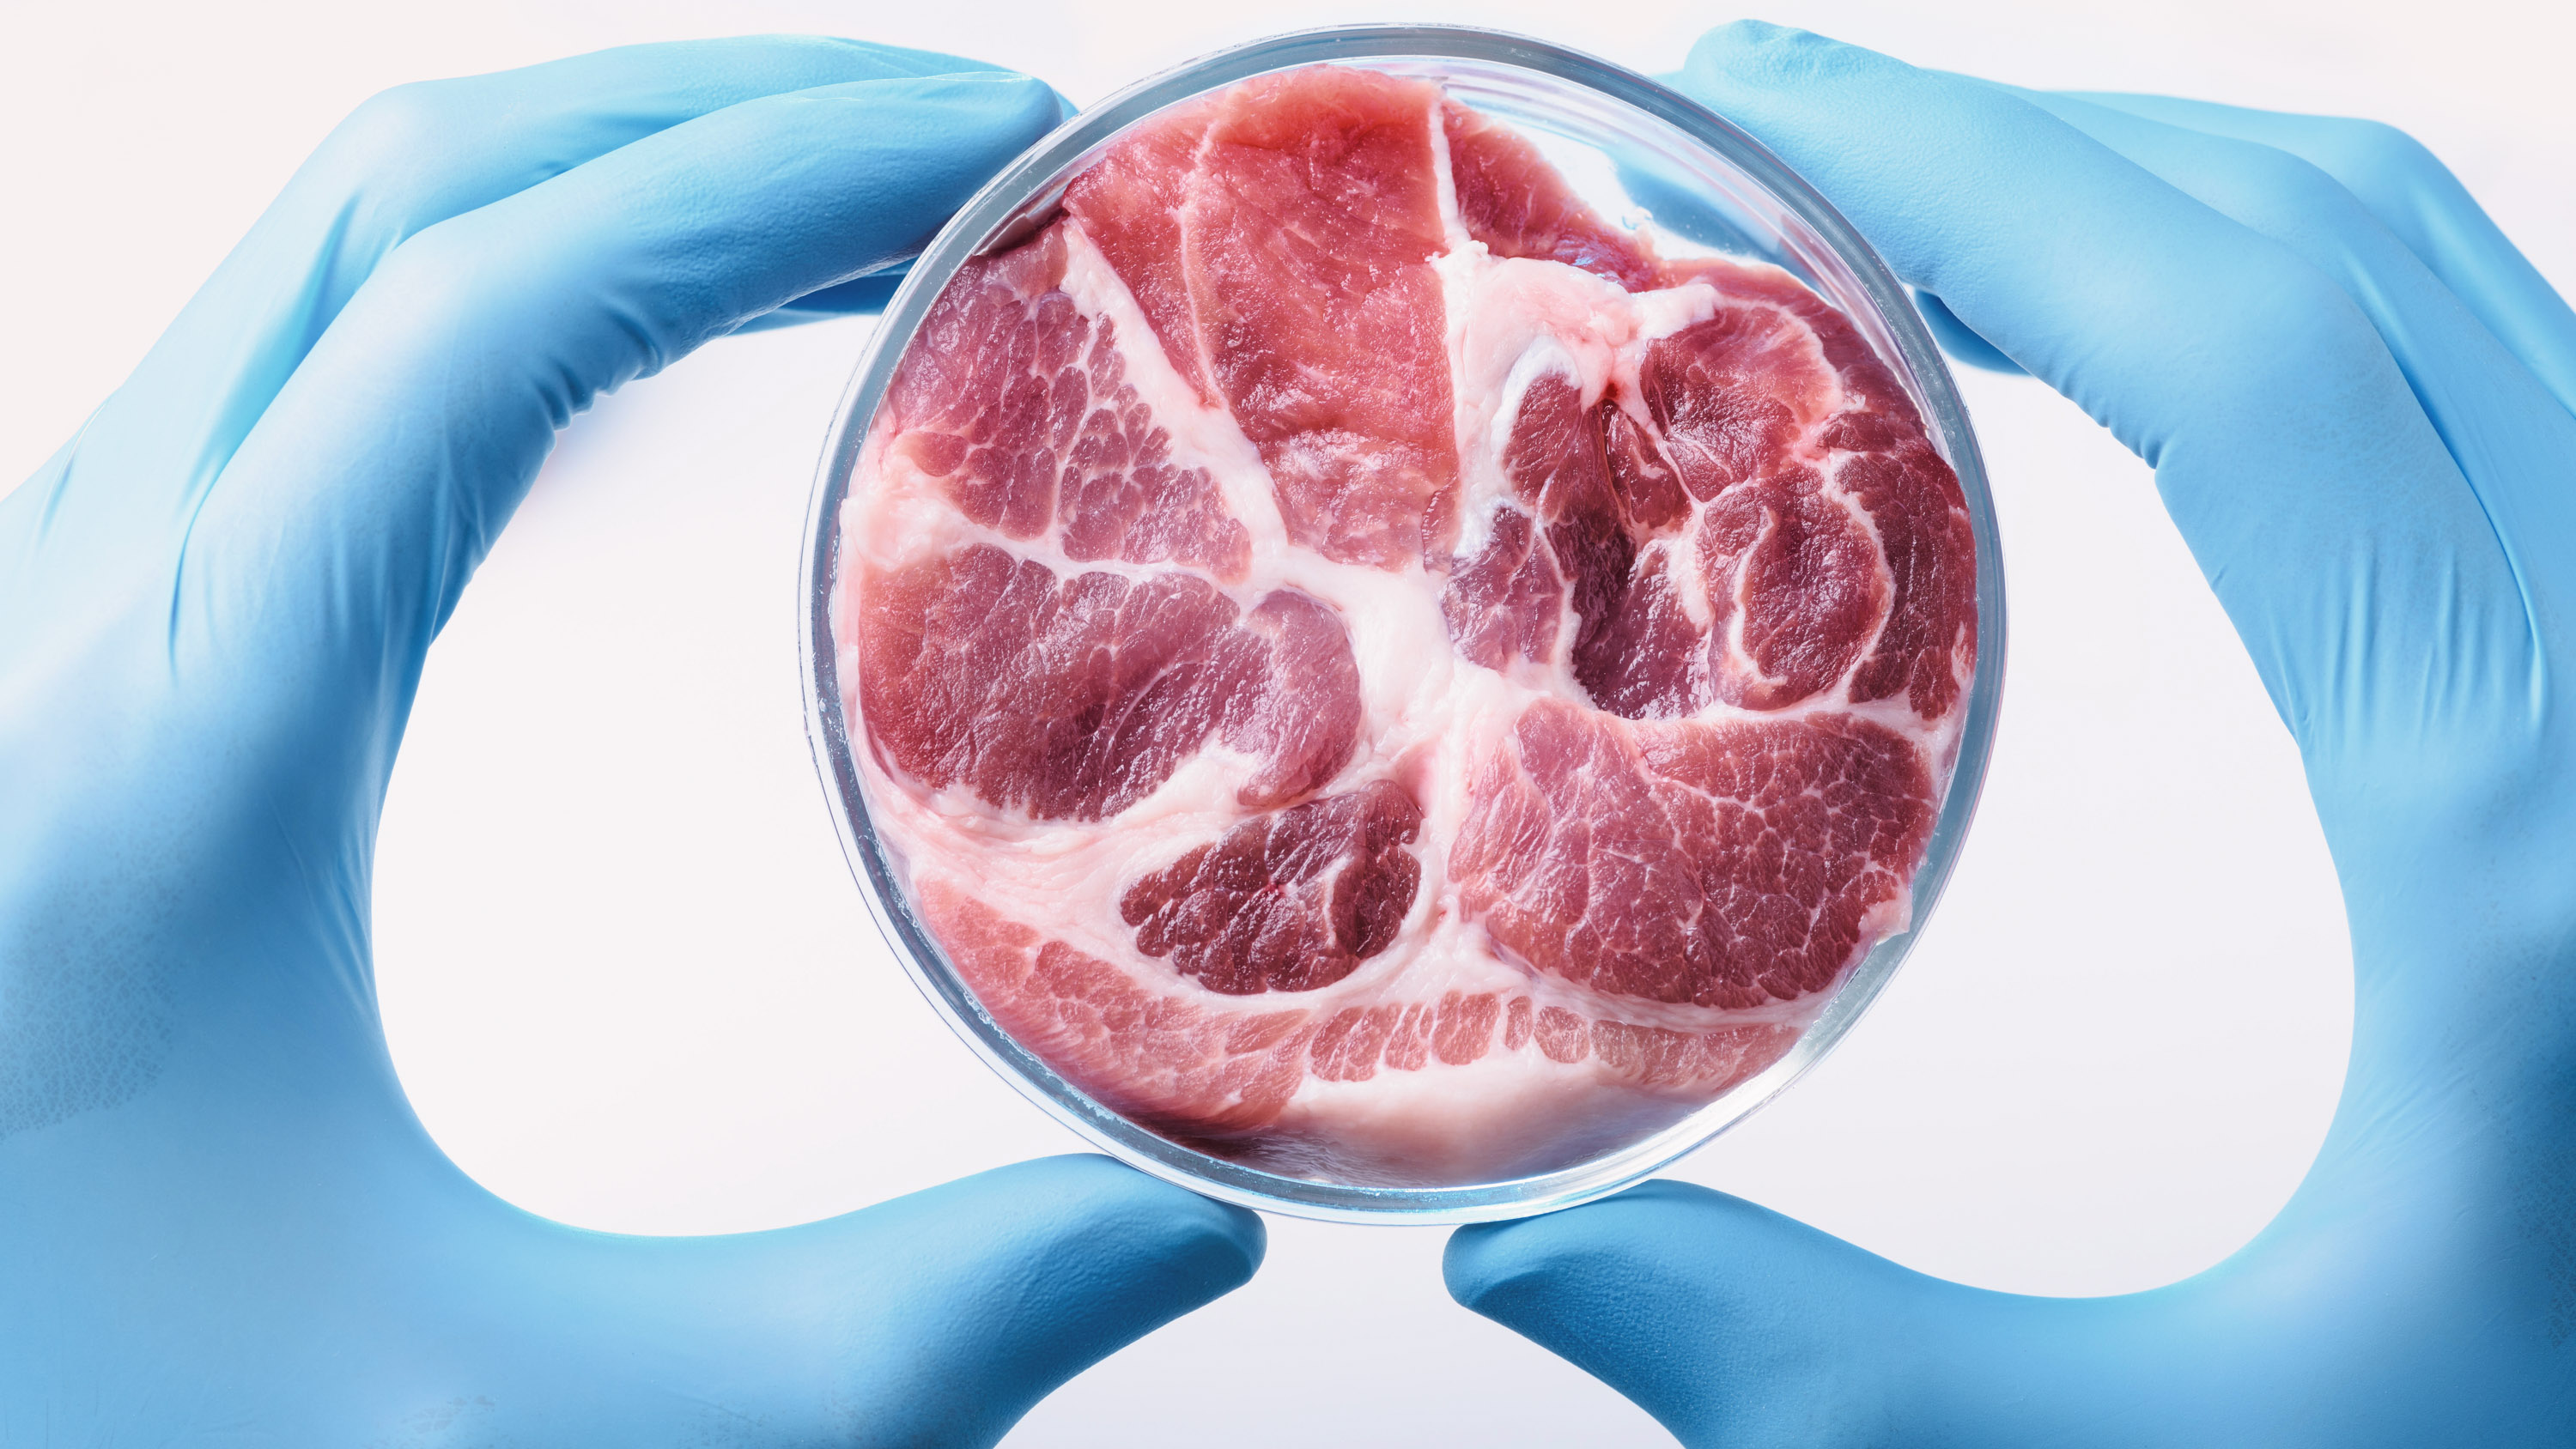 Raw whole meat sample in laboratory Petri dish.